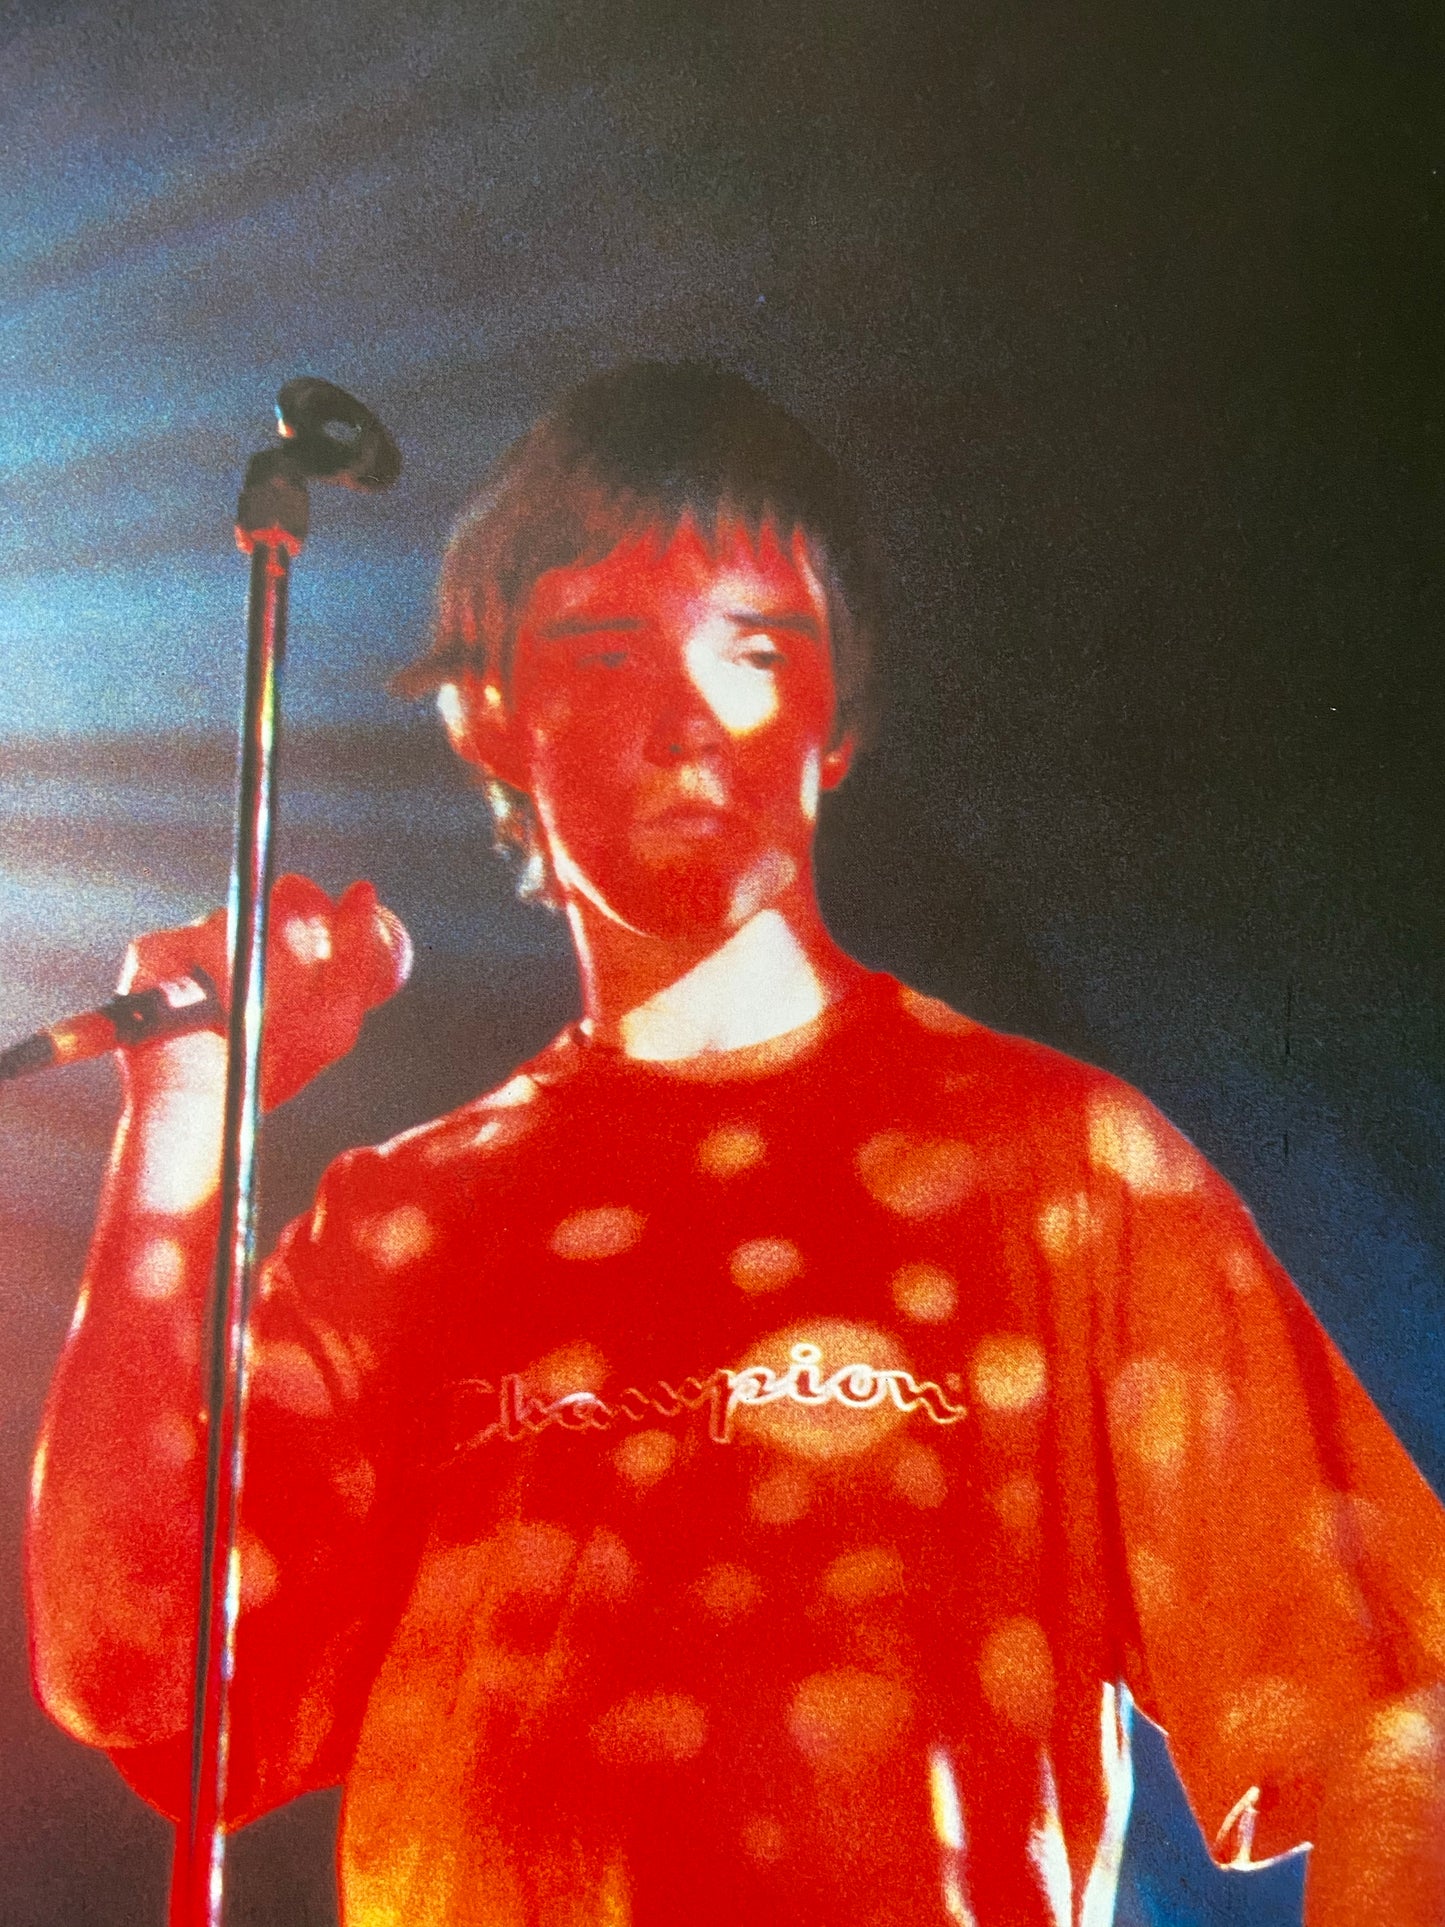 The Stone Roses 1995 Japanese Tour Programme